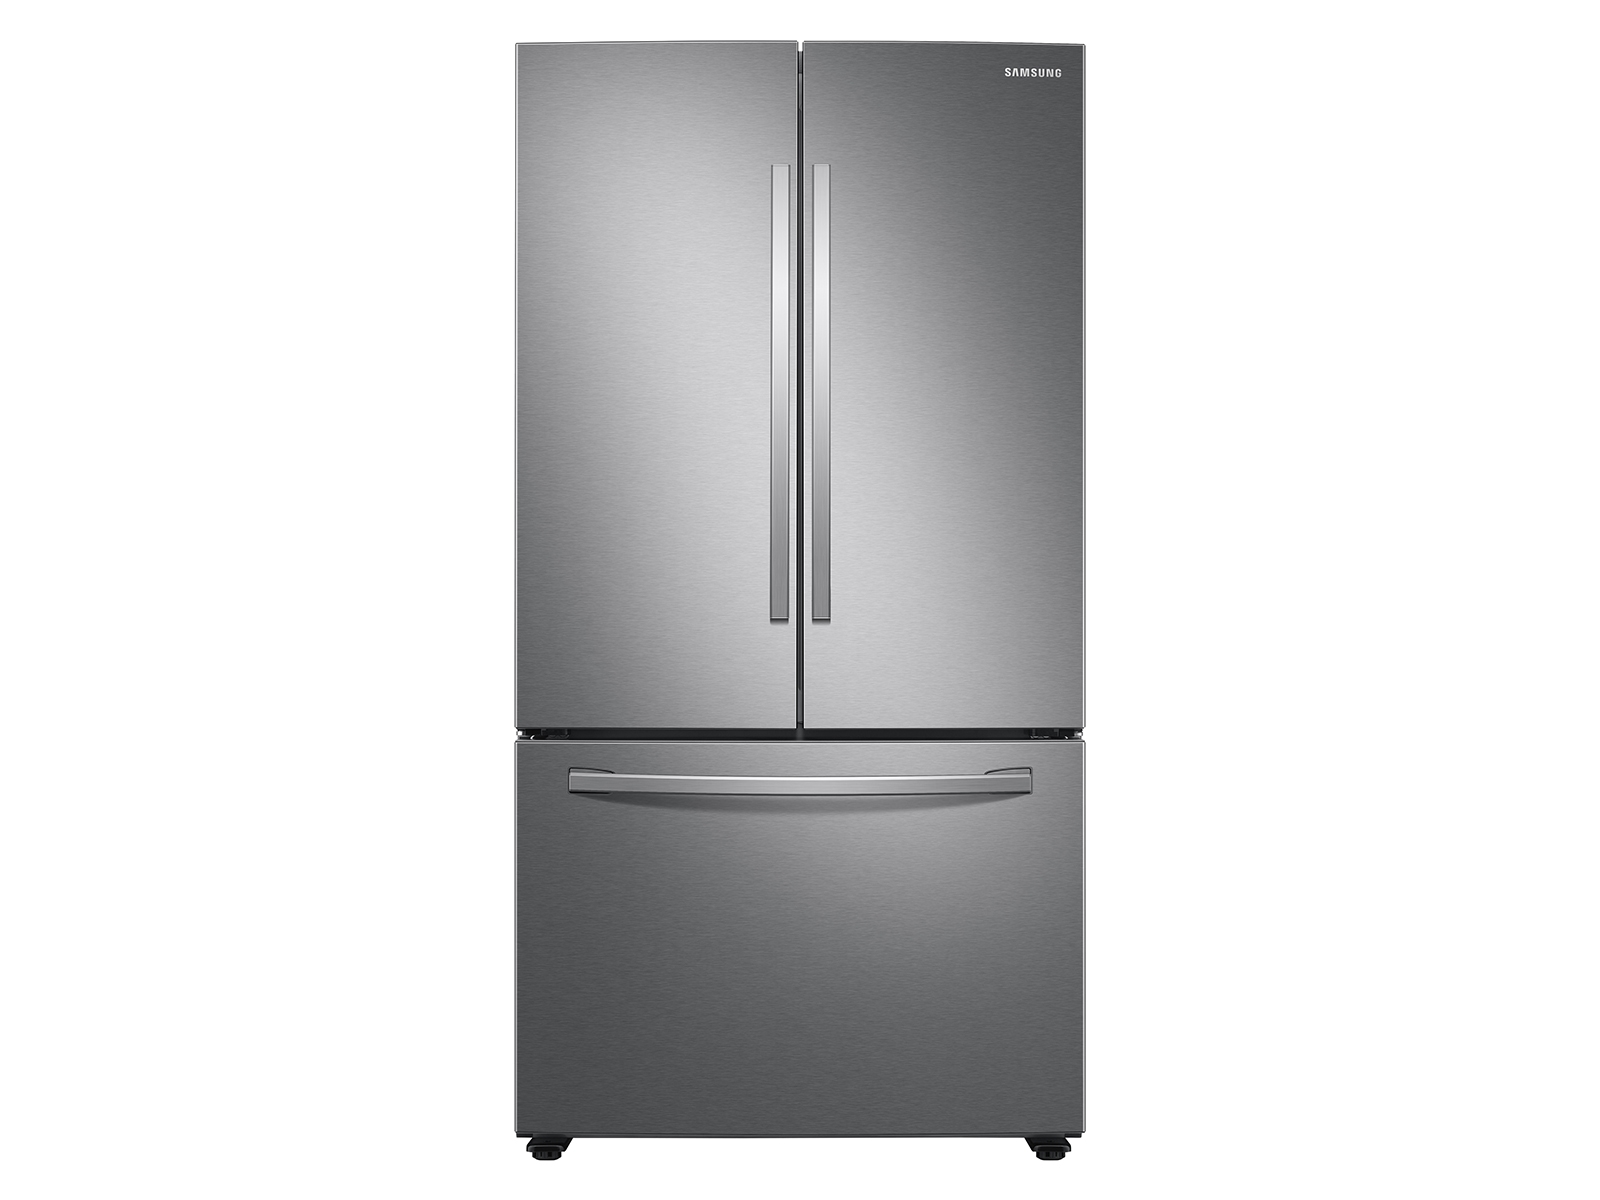 Photos - Fridge Samsung 28 cu. ft. Large Capacity 3-Door French Door Refrigerator with Aut 